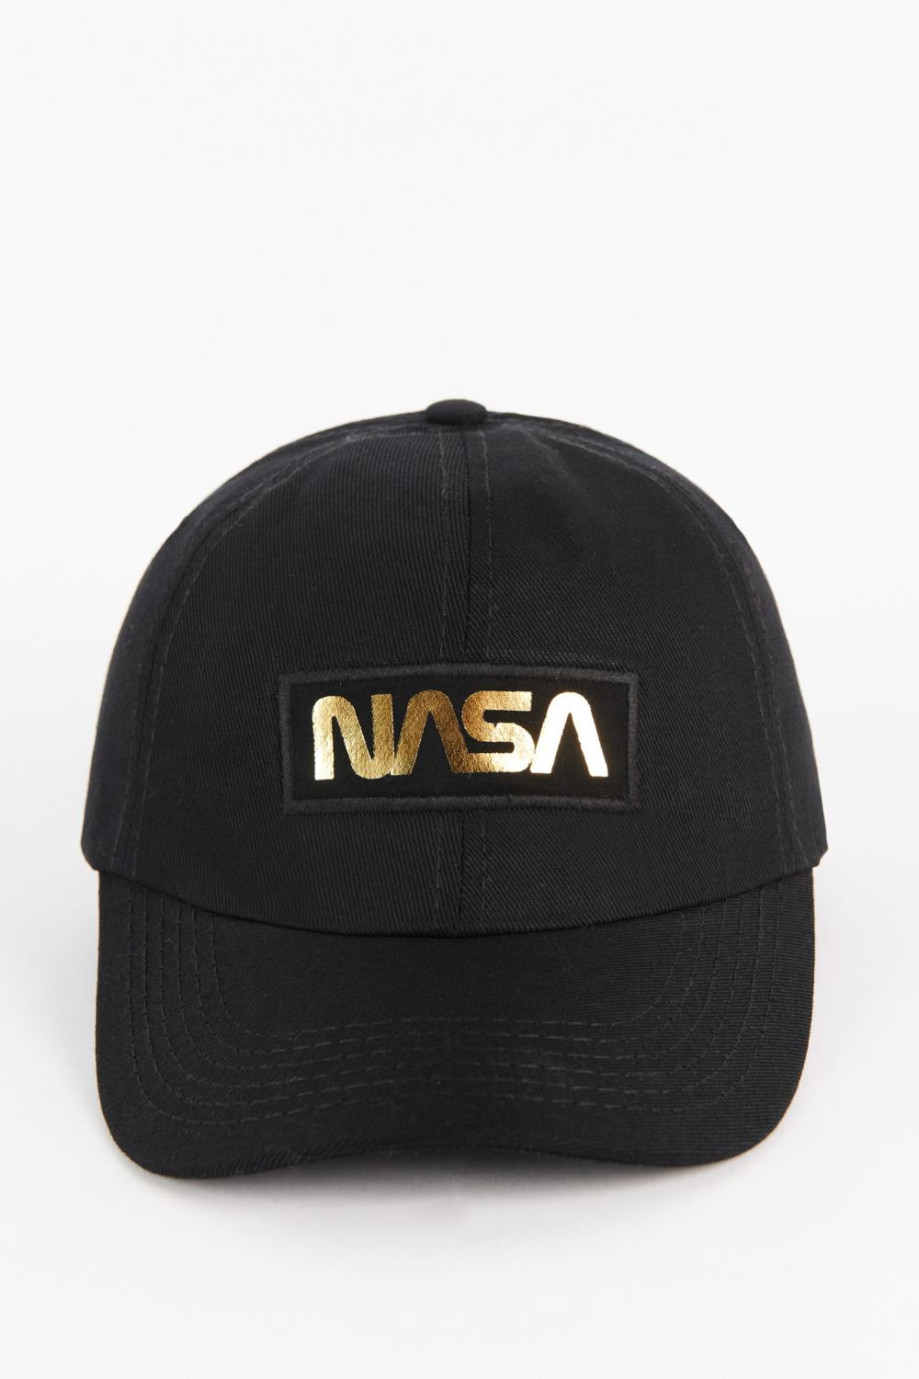 Cachucha negra tipo beisbolera con estampado dorado de NASA